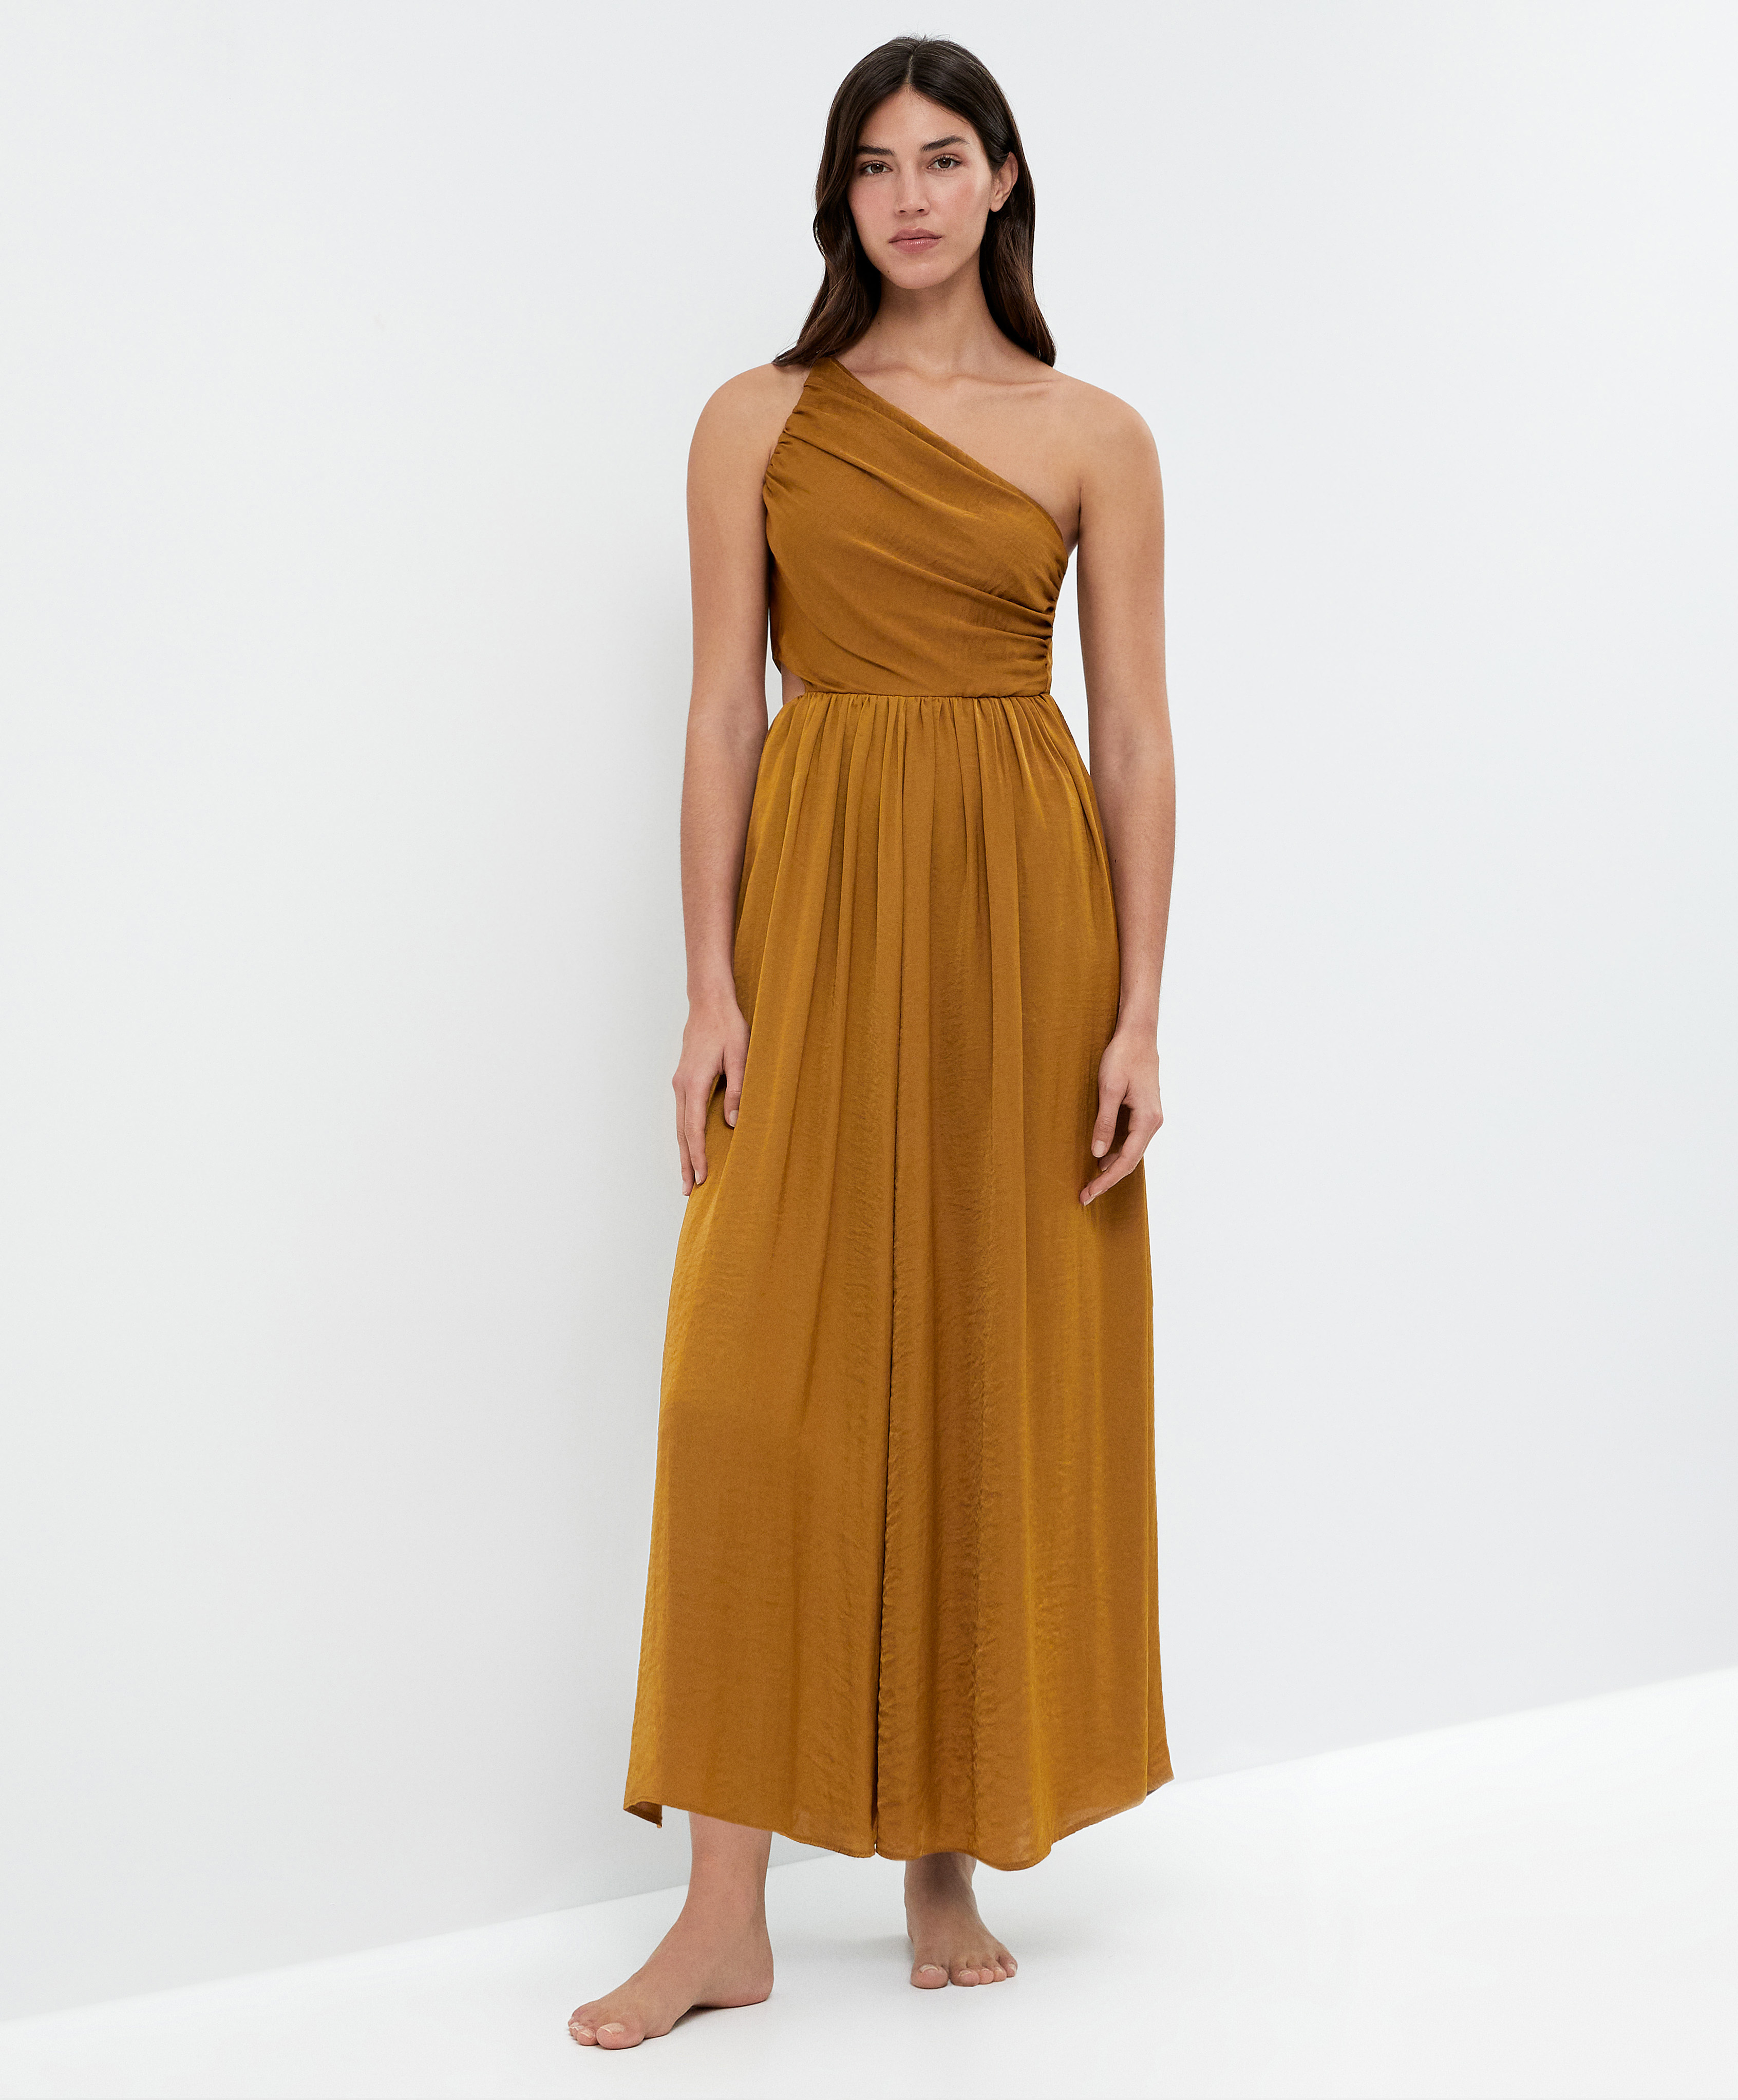 Long asymmetric dress with a satin finish